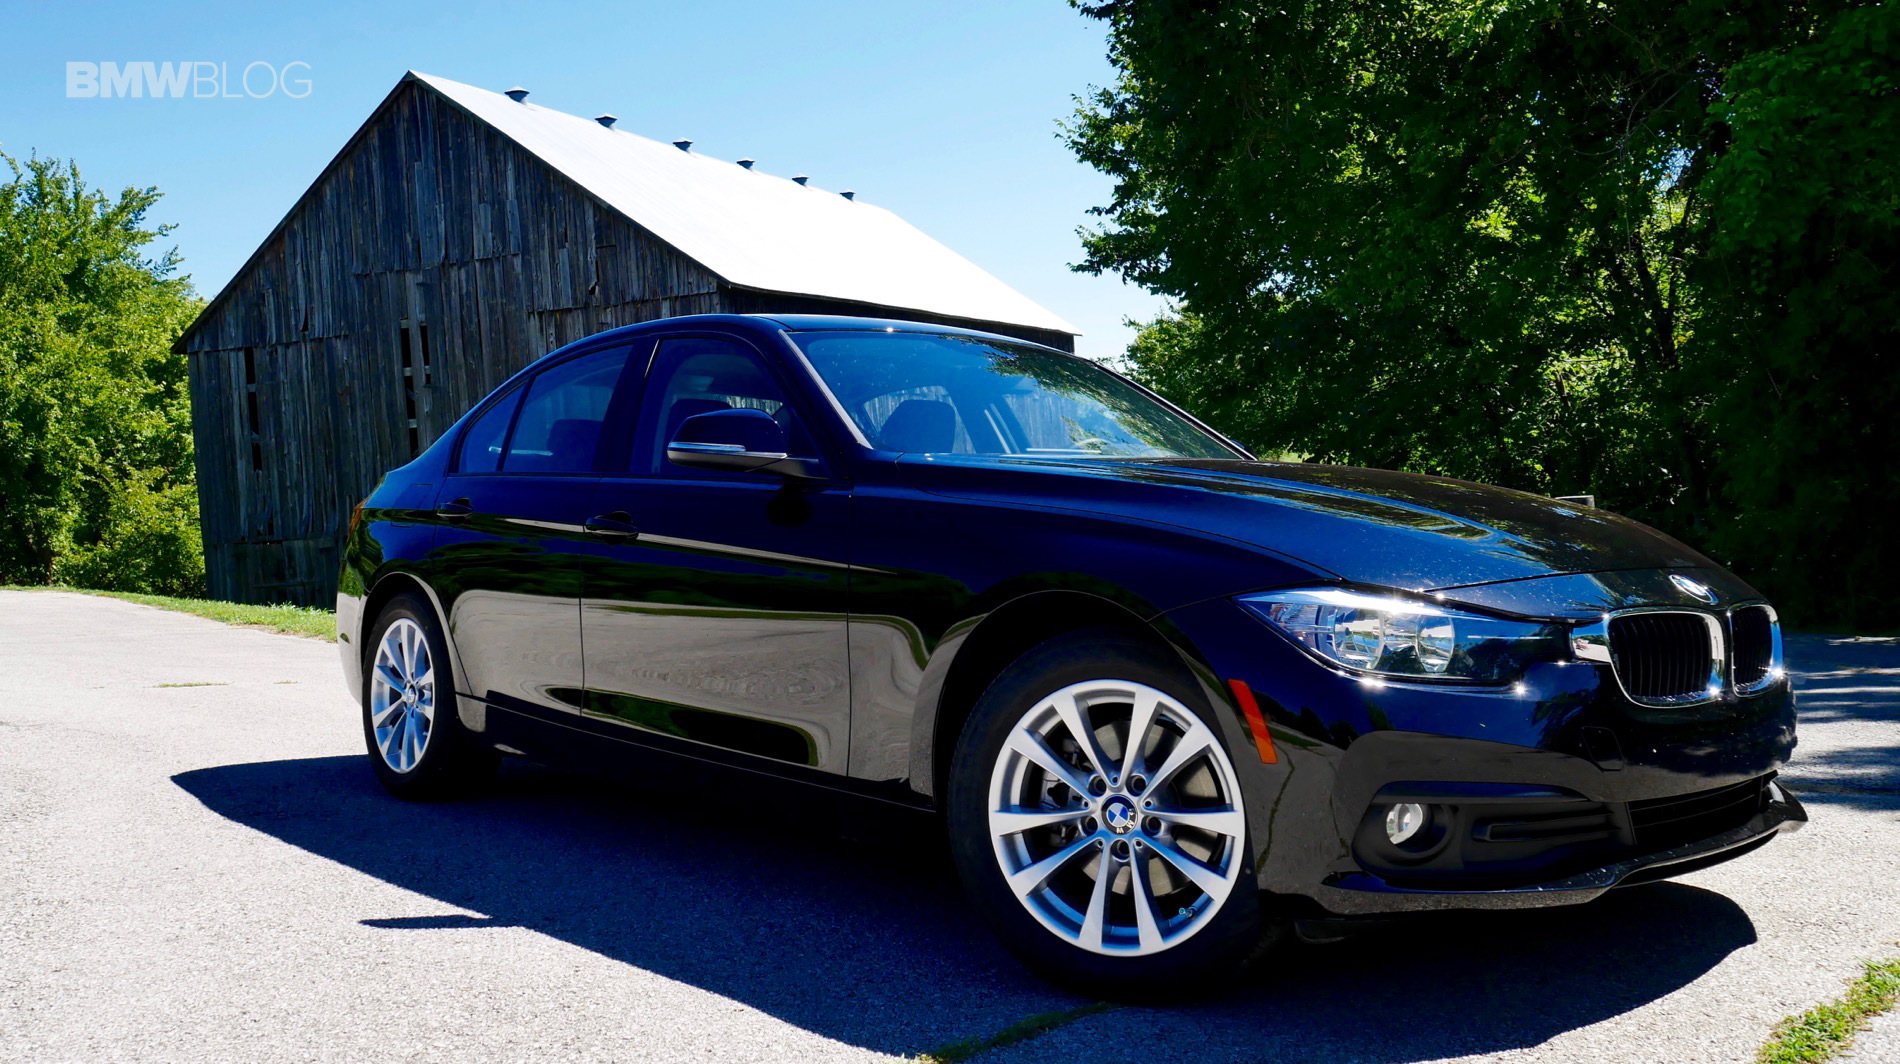 TEST DRIVE: 2016 BMW 320i Sedan